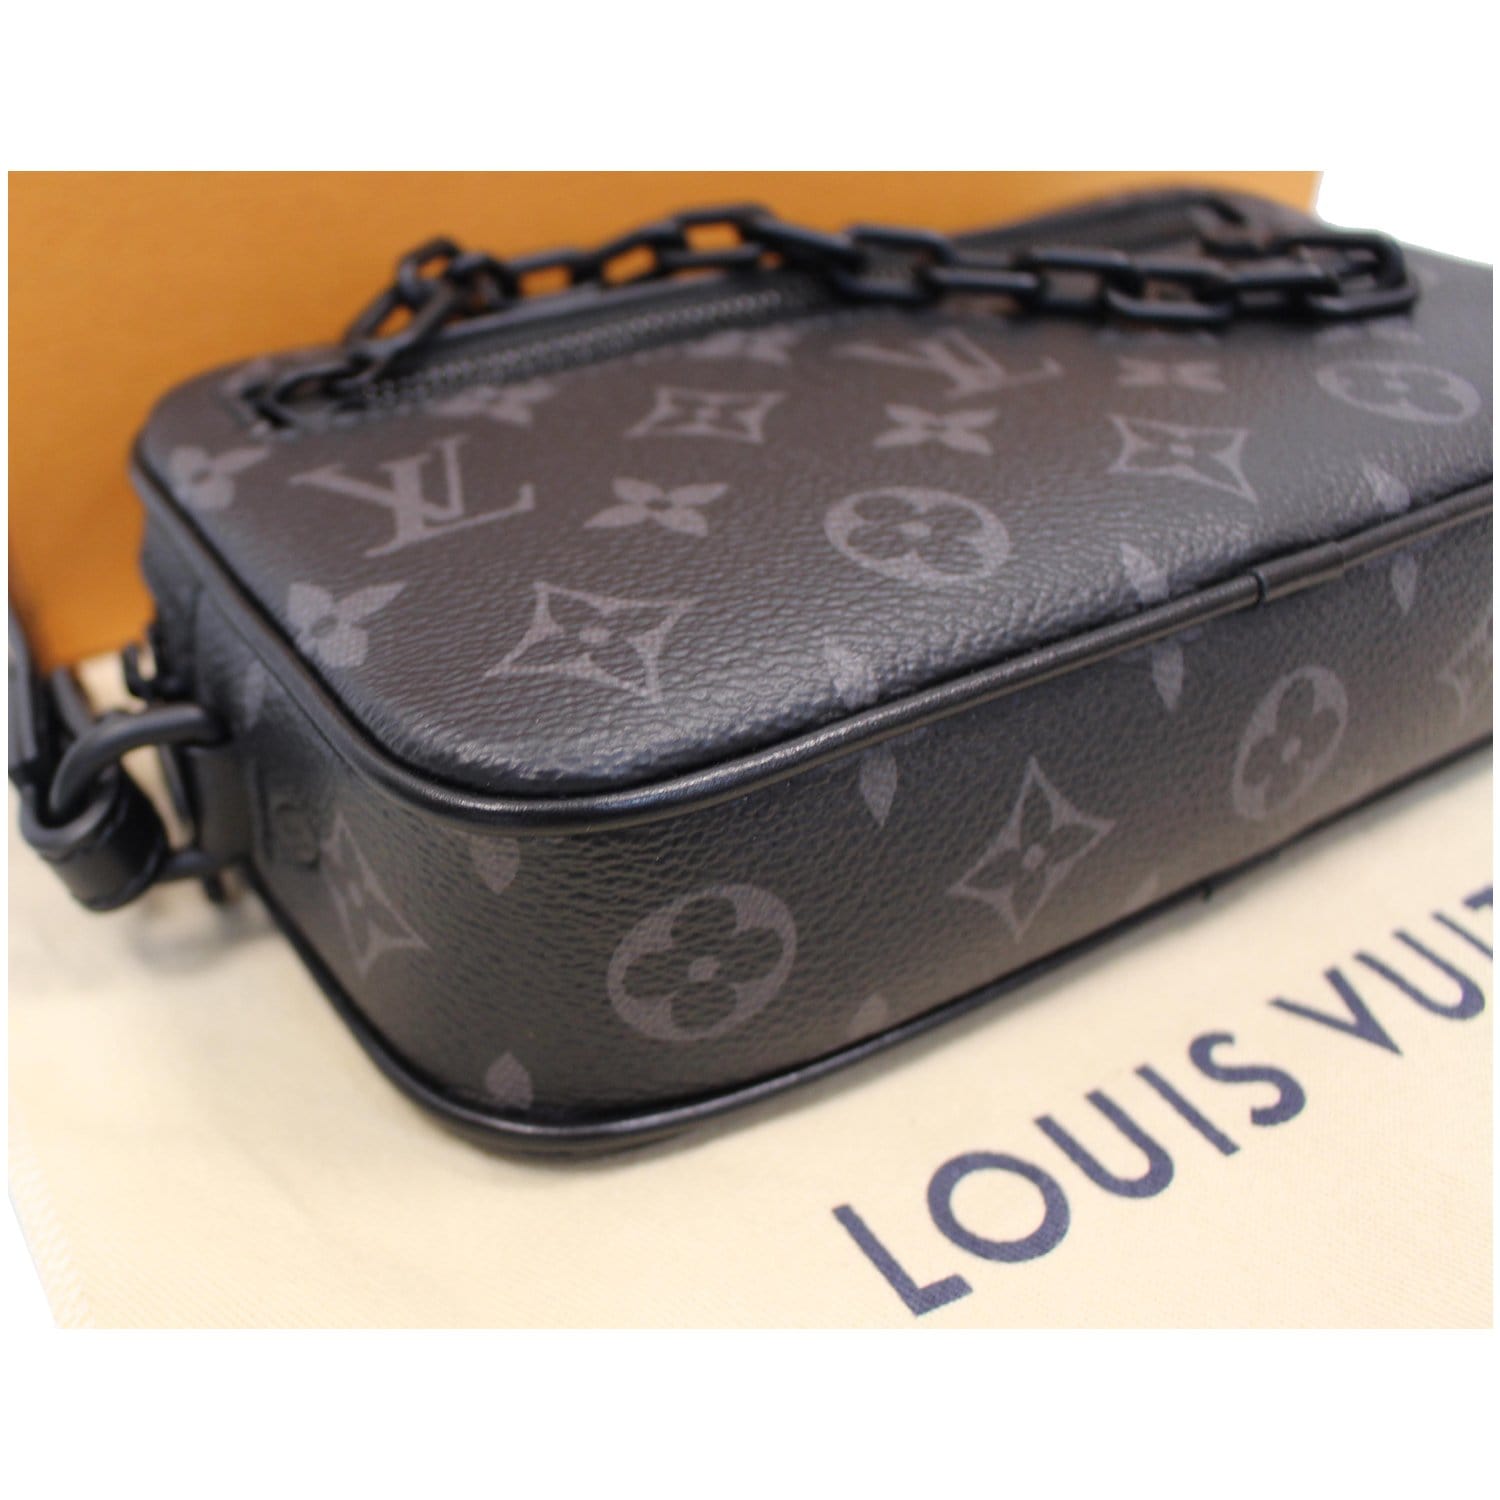 LOUIS VUITTON Monogram Prism Pochette Volga Clutch Bag Silver